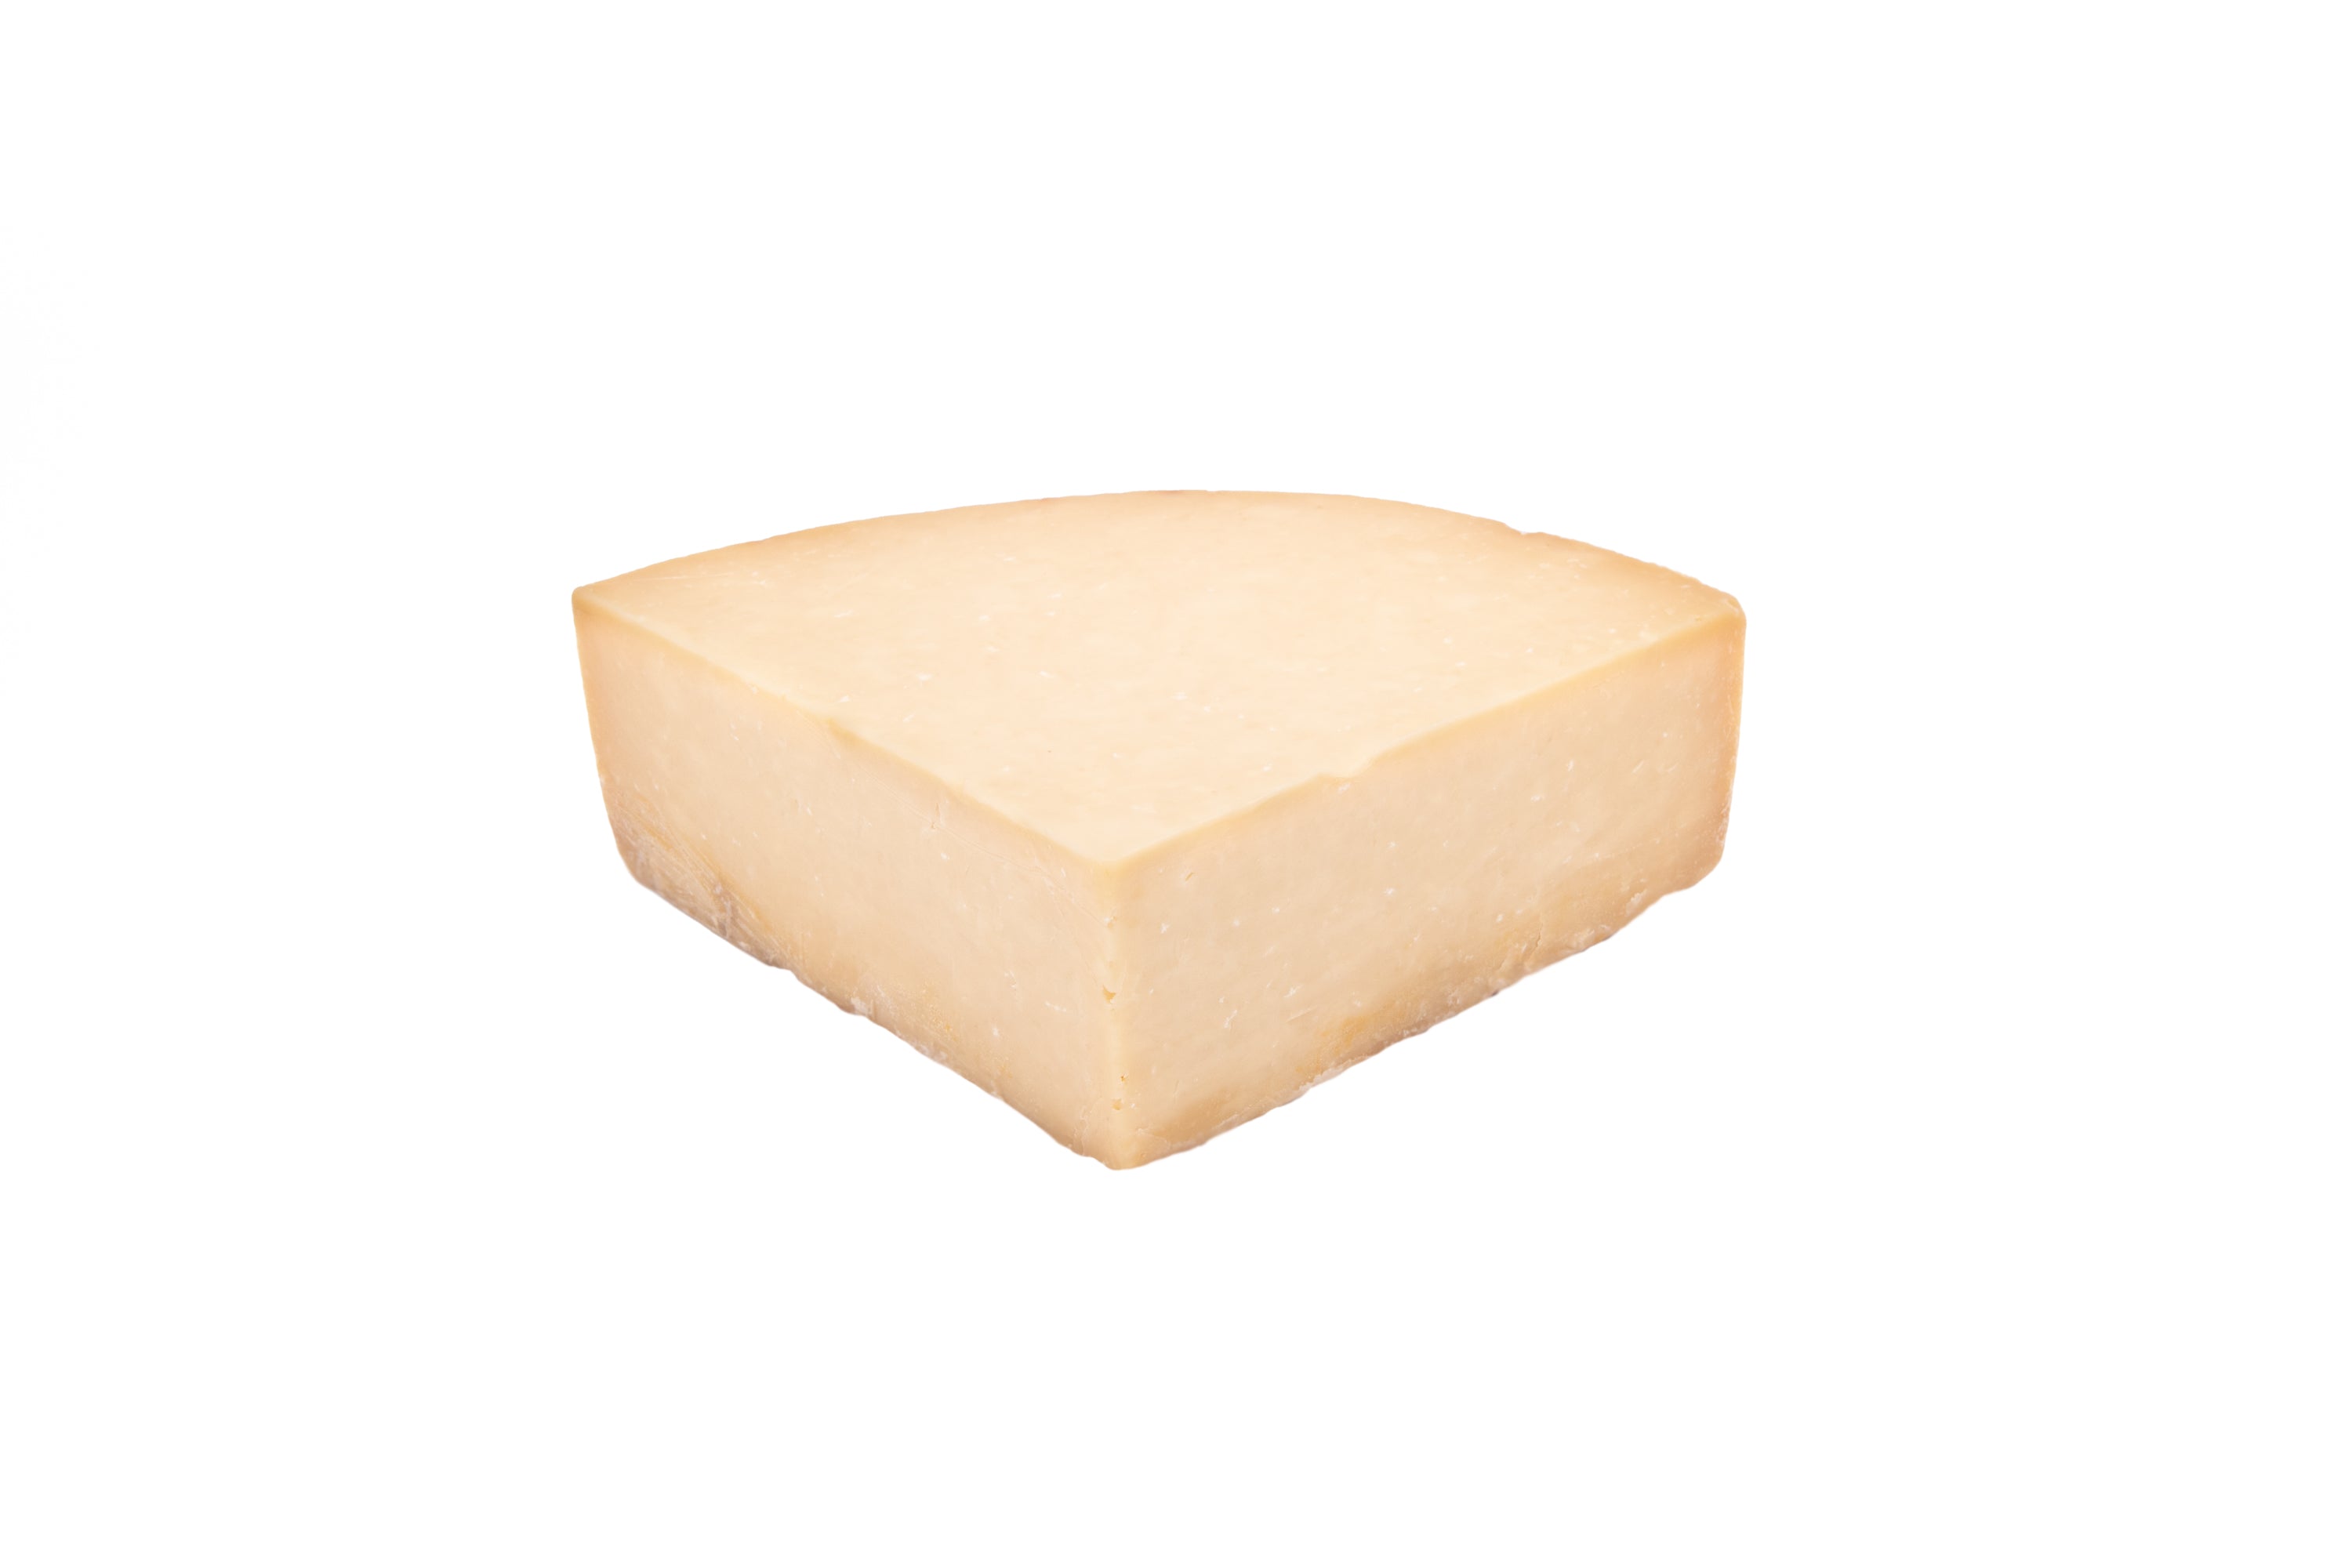 Cheese - Cabot Clothbound Cheddar 8 oz